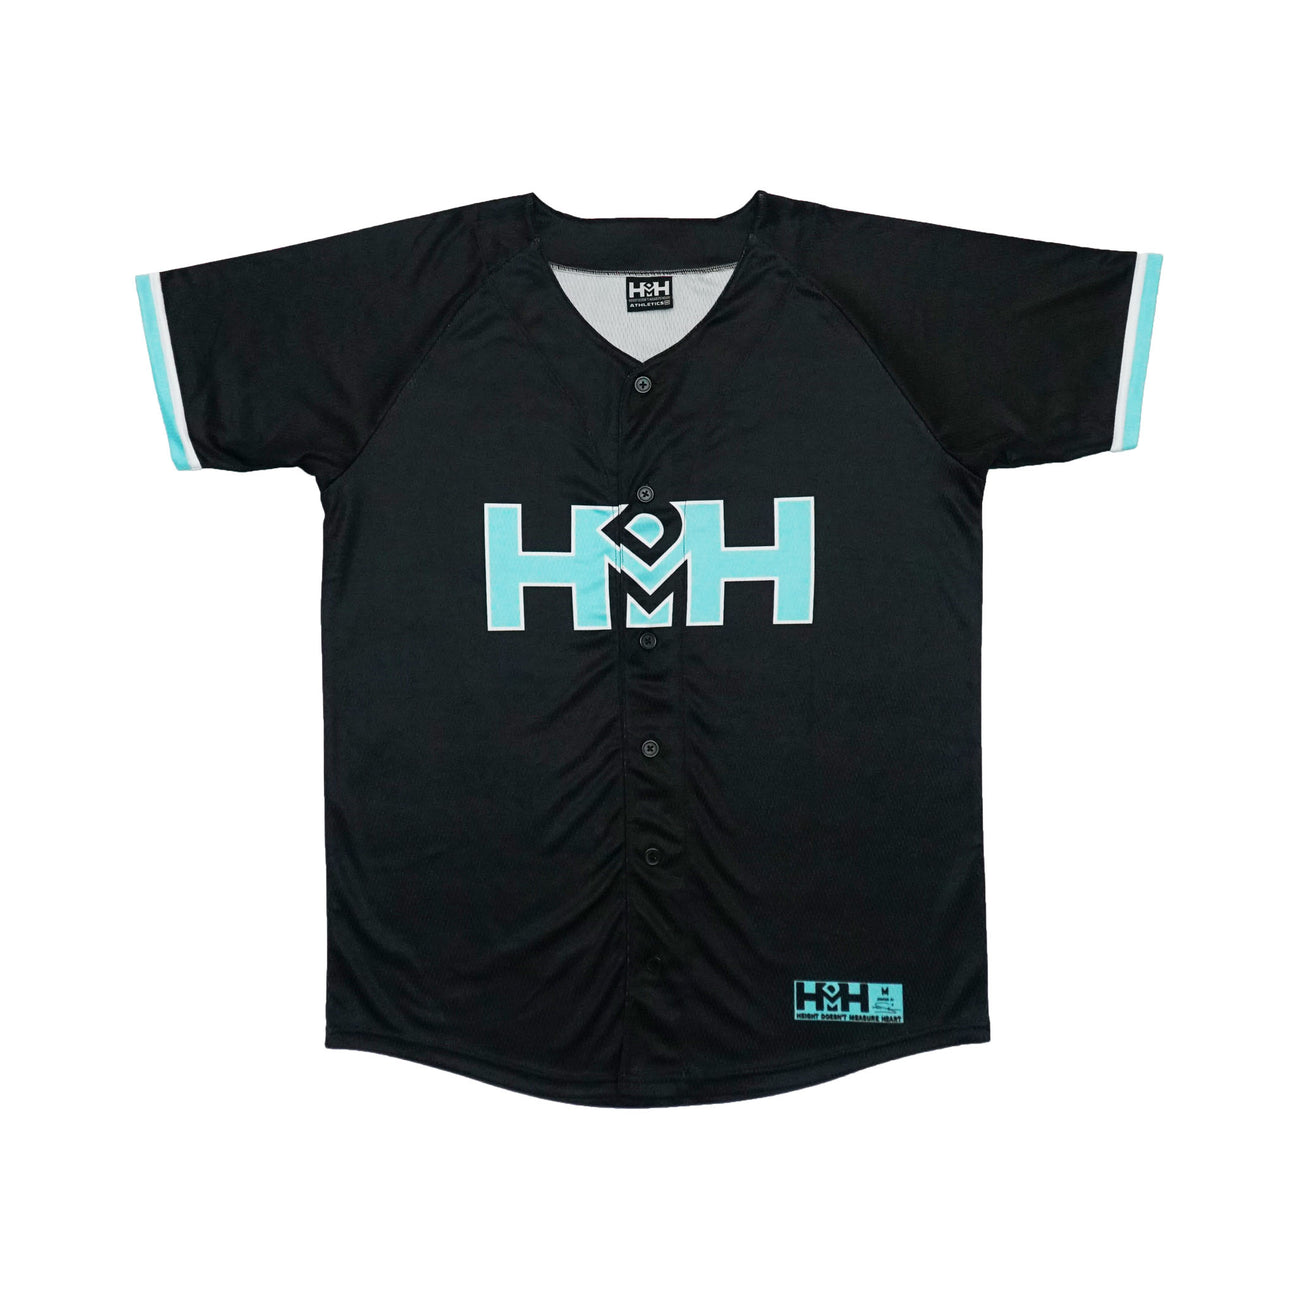 Louis Vuitton Baseball Jersey Shirt Lv Luxury Clothing #Baseball